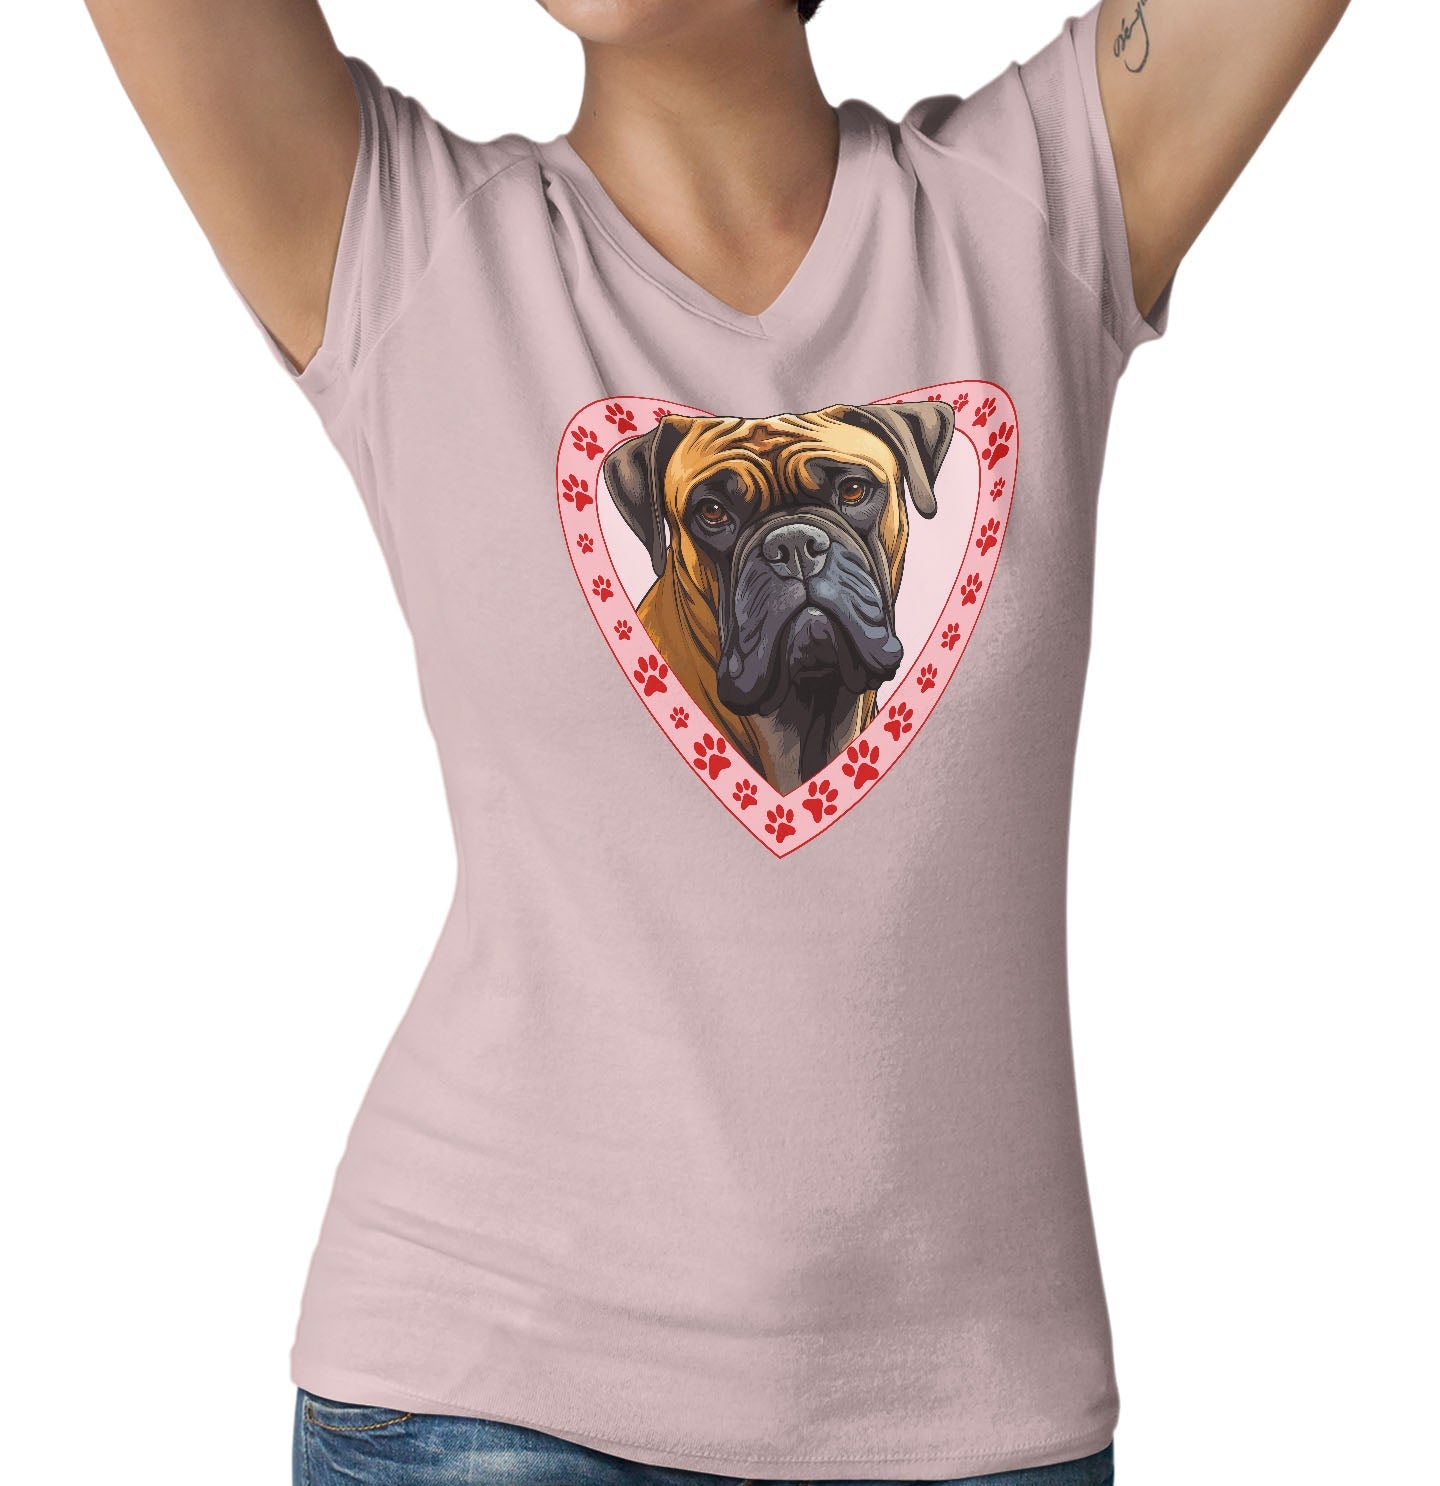 Bullmastiff Illustration In Heart - Women's V-Neck T-Shirt